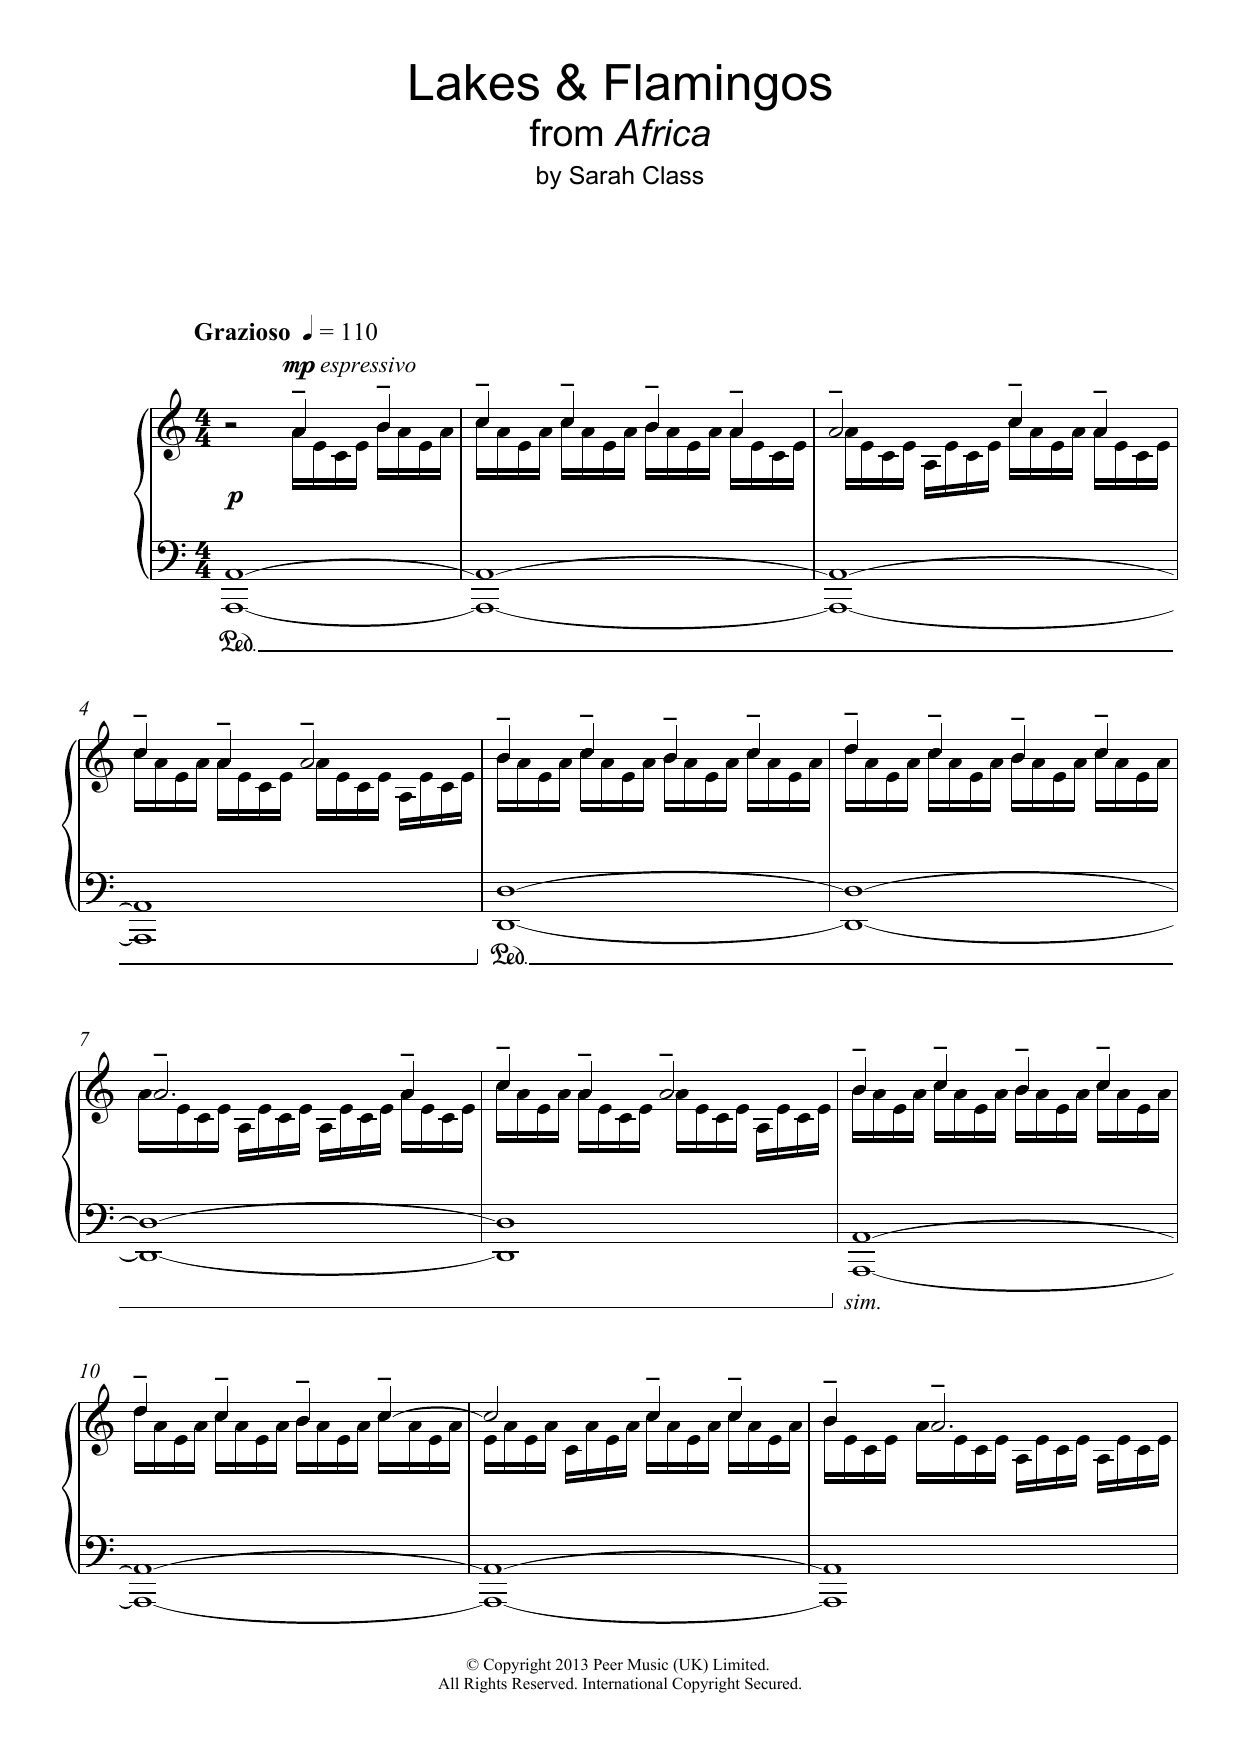 Sarah Class Lakes & Flamingos Sheet Music Notes & Chords for Piano - Download or Print PDF